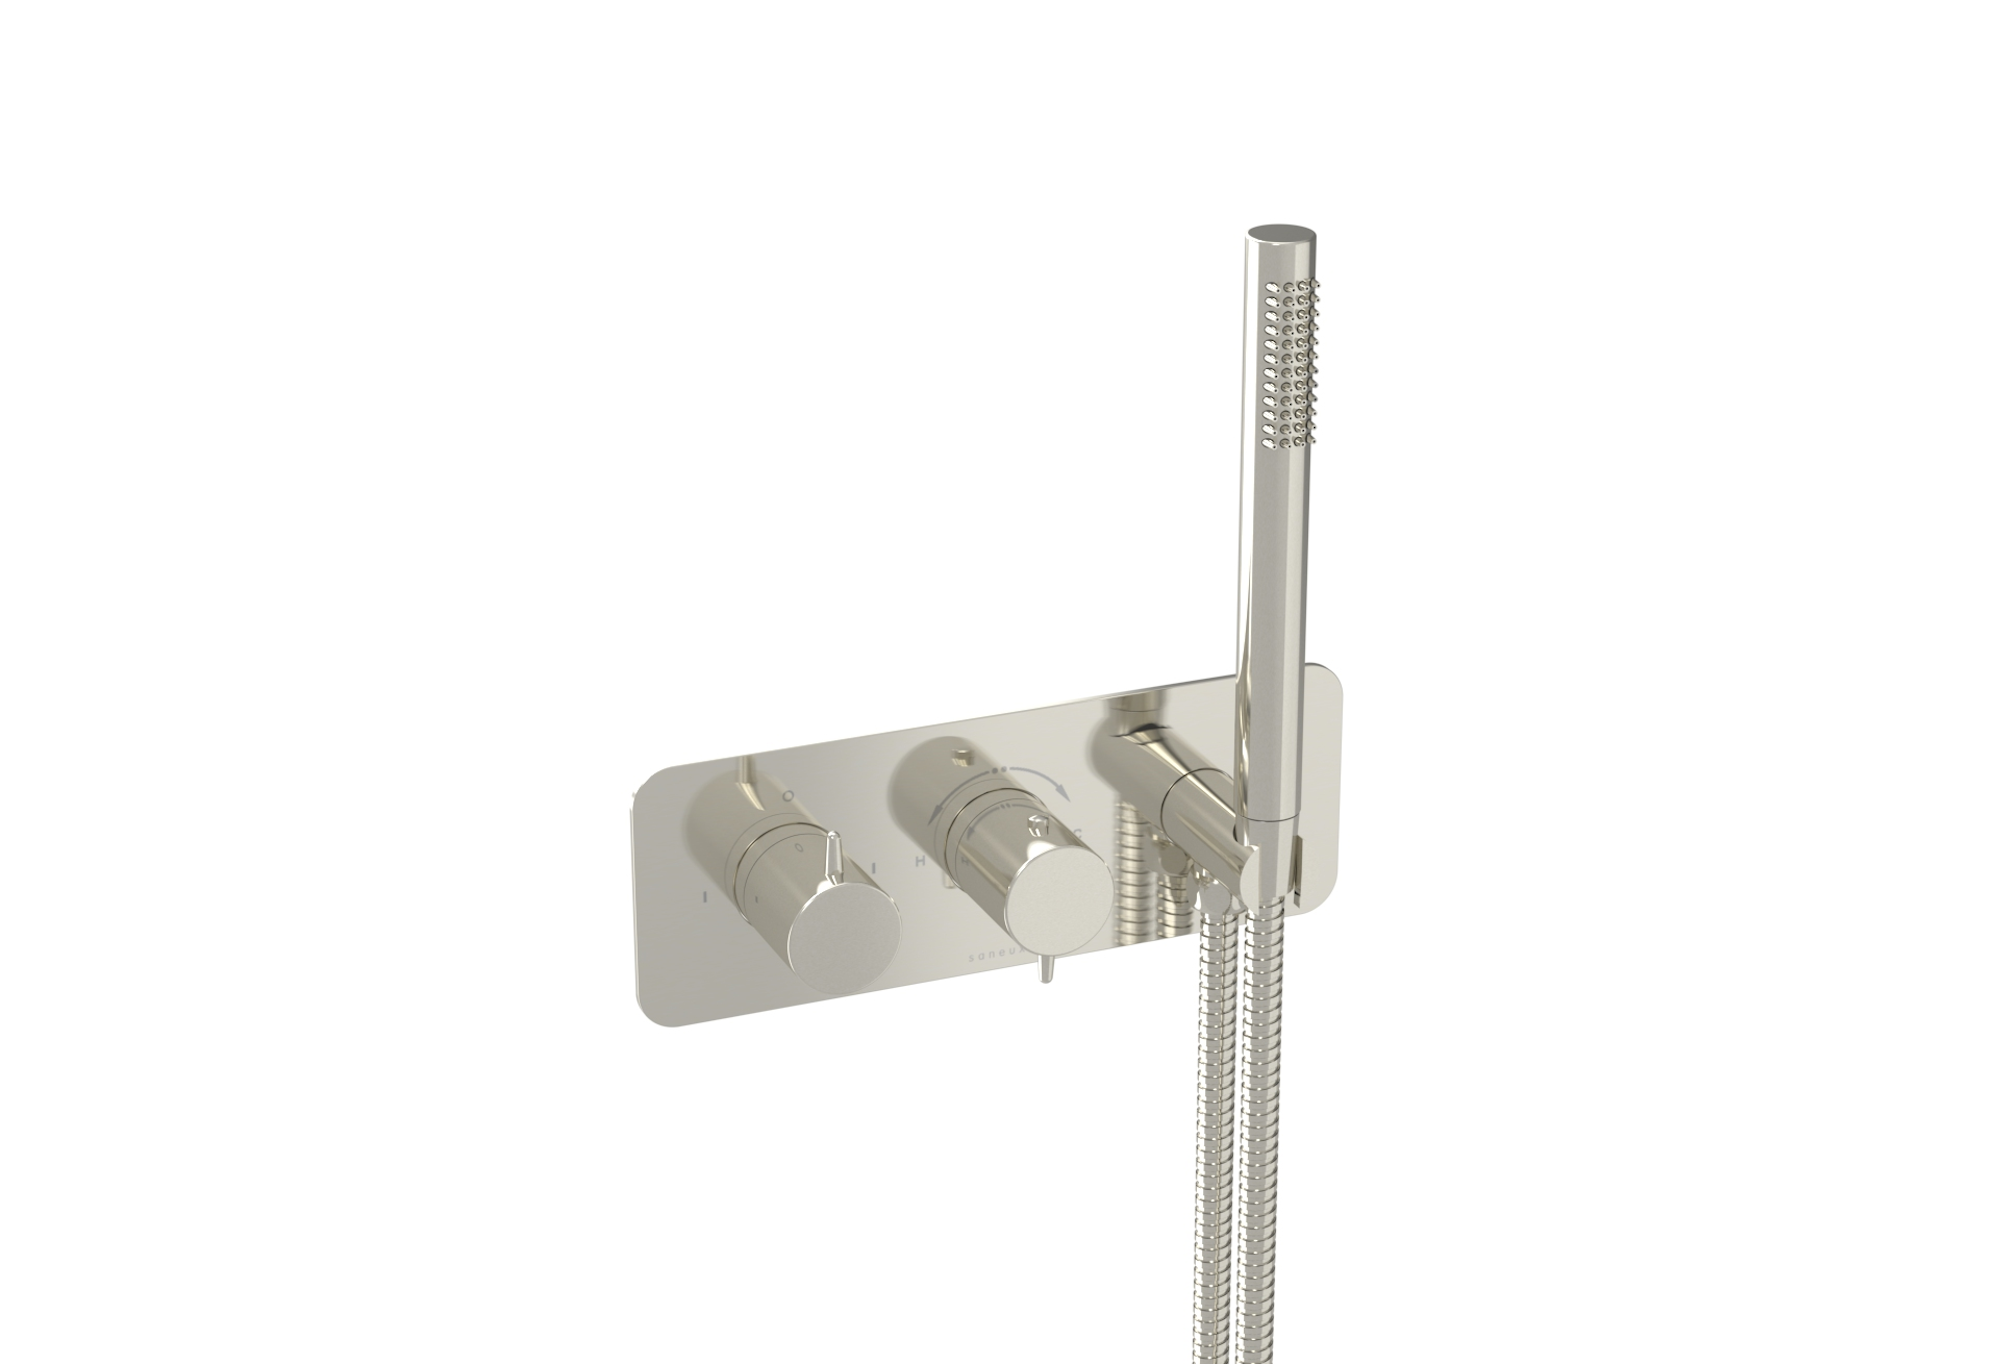 EDEN 2 way thermostatic shower valve kit in landscape with handspray - Brushed Nickel